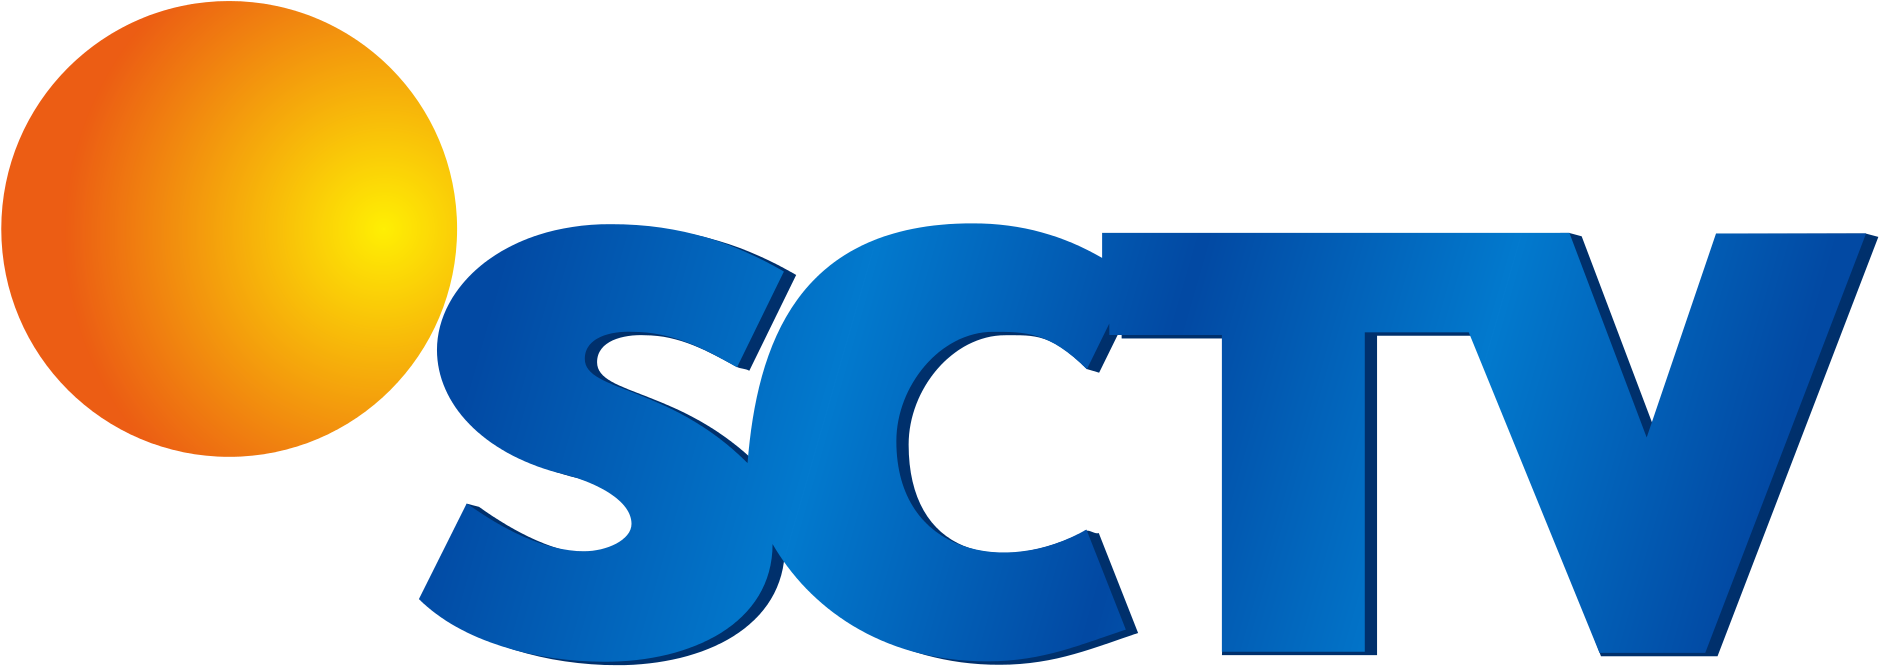 Nonton Tv Online Indonesia Sctv - Sctv Logo (2000x821)